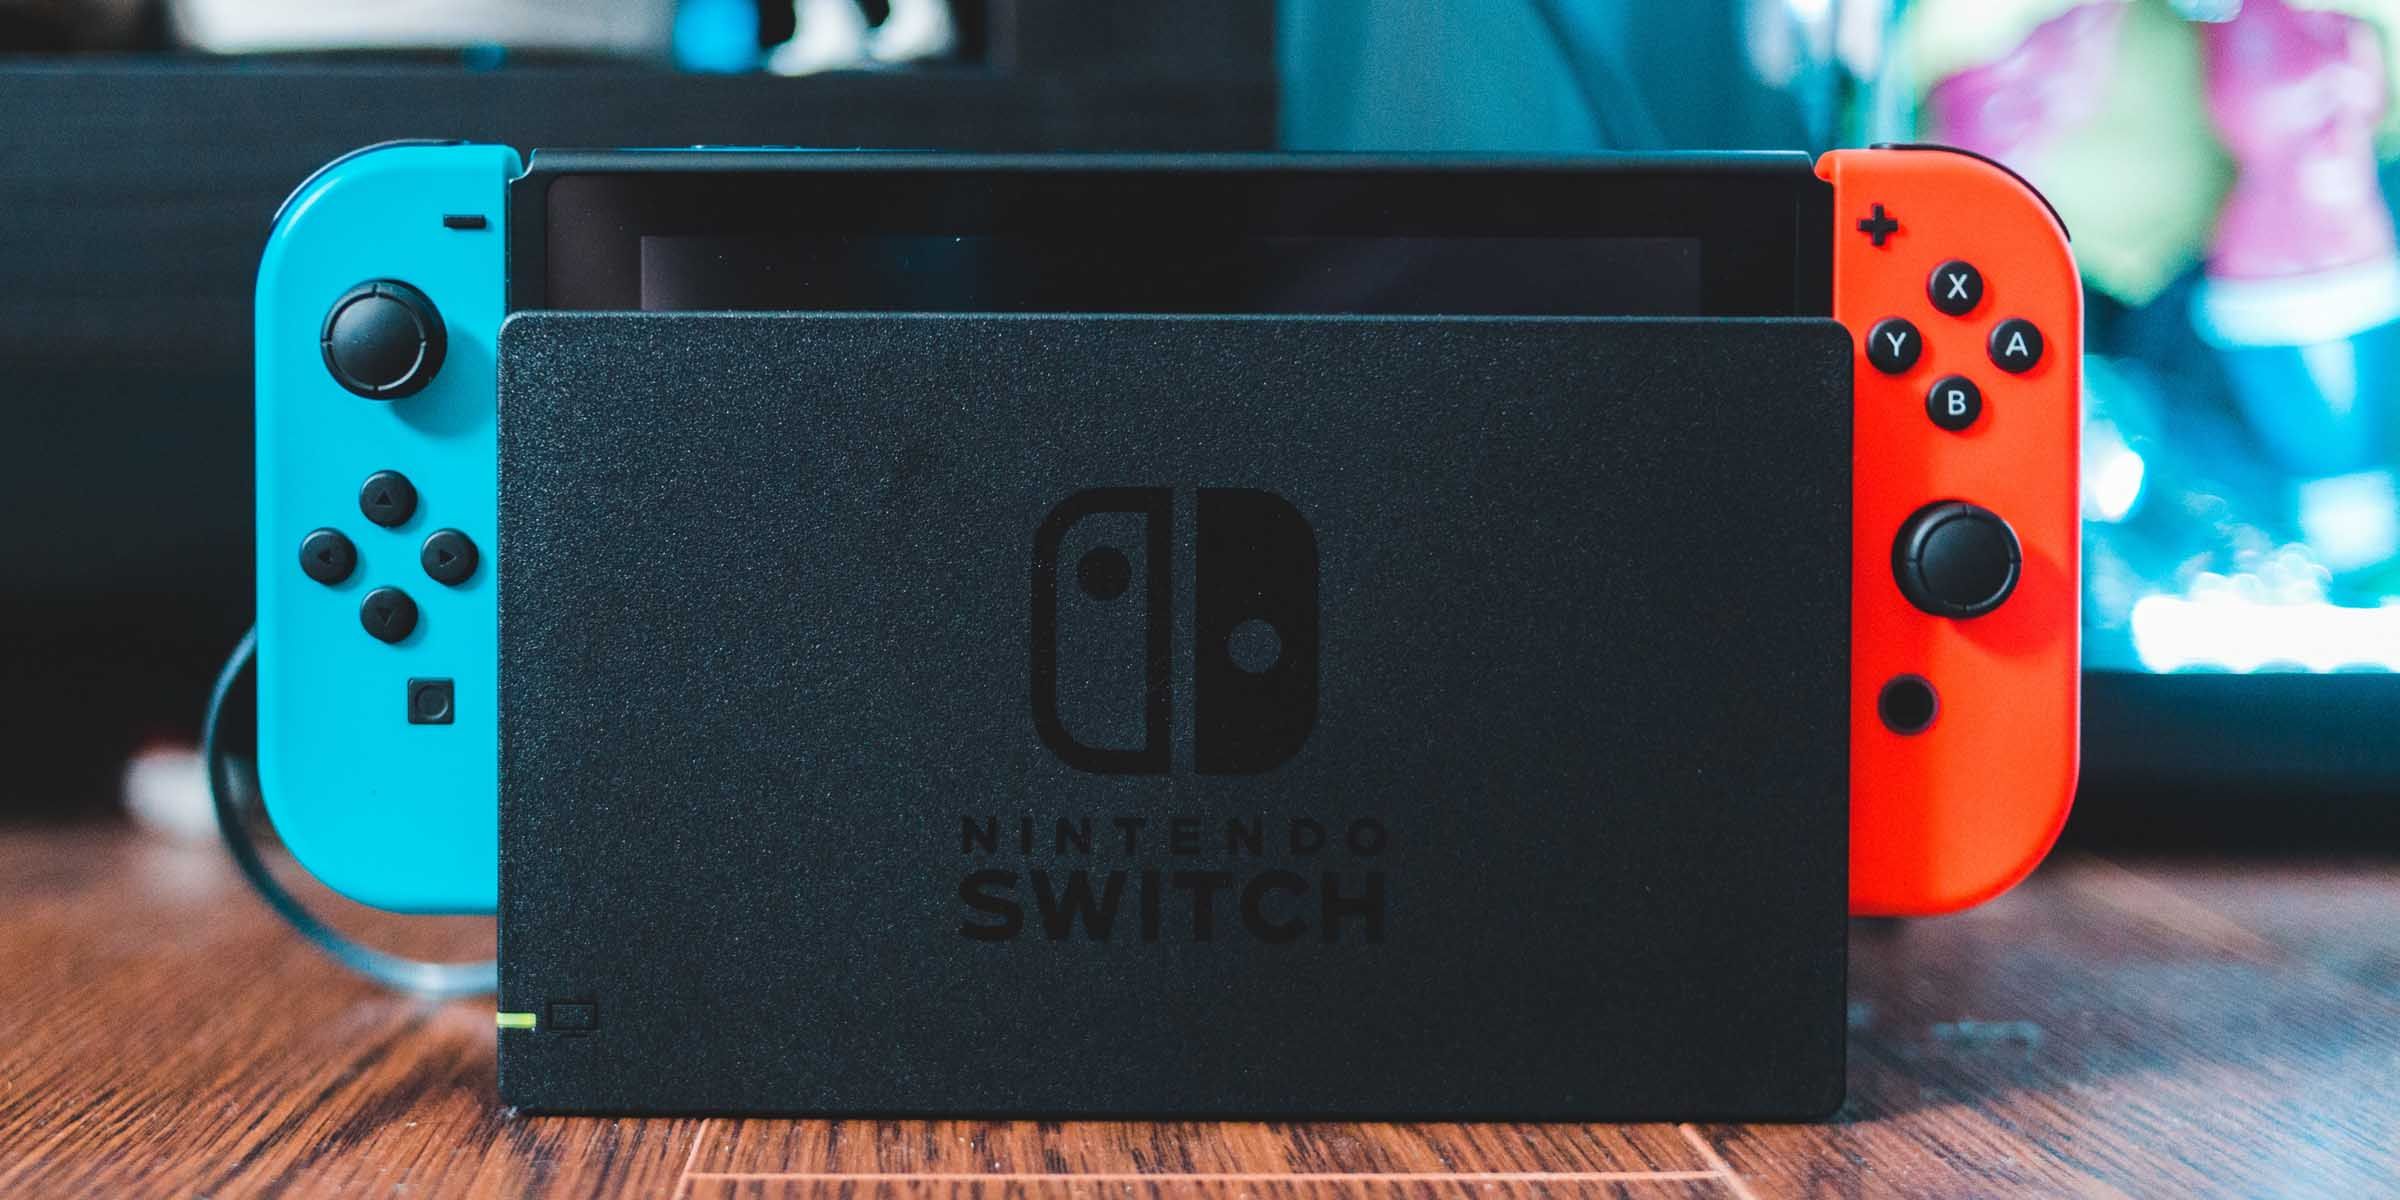 Original Nintendo Switch docked